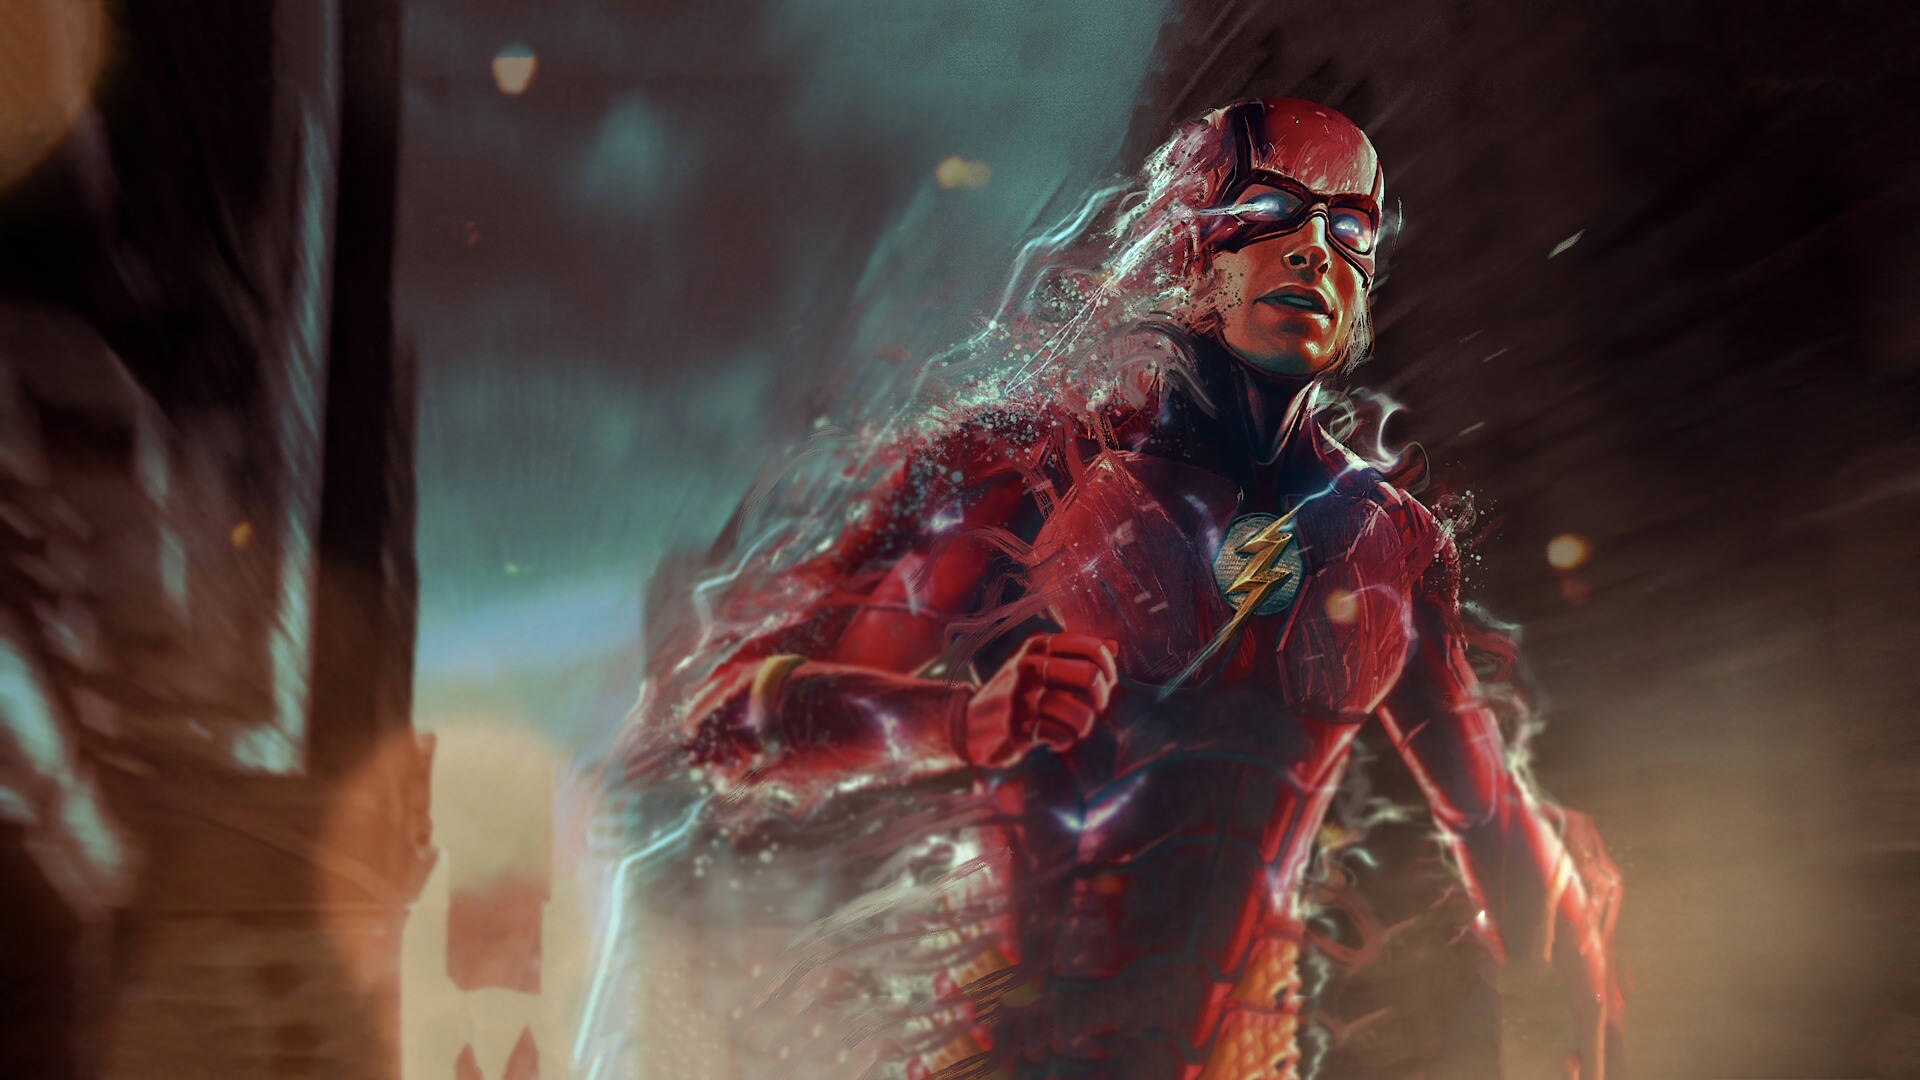 Digital Painting Of Dc Superhero Flash Background